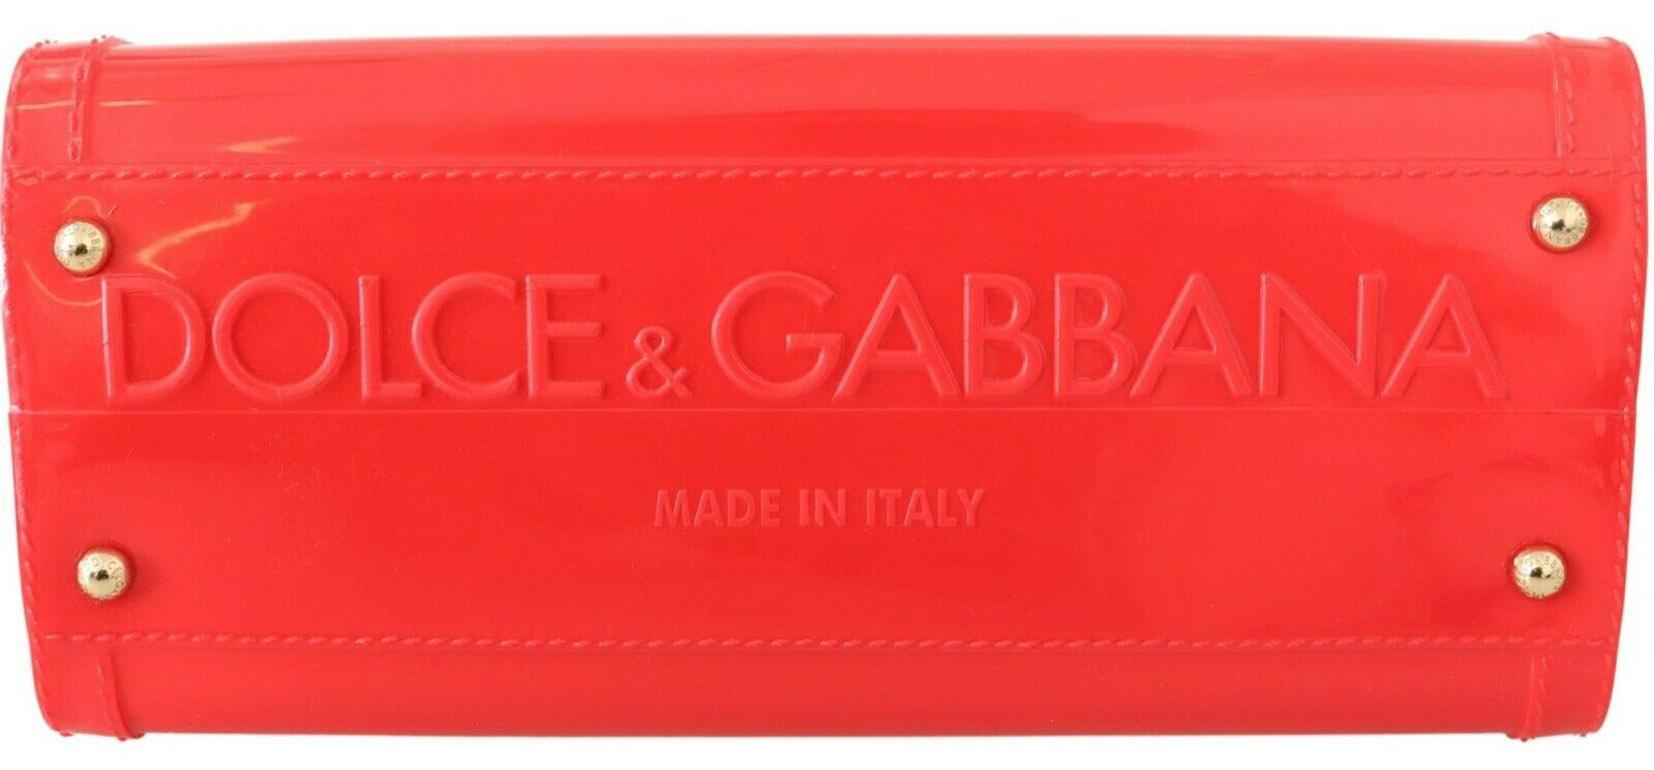 Women's Dolce & Gabbana Red PVC Sicily Handbag Bag Purse Gold Detailing Double Handle For Sale